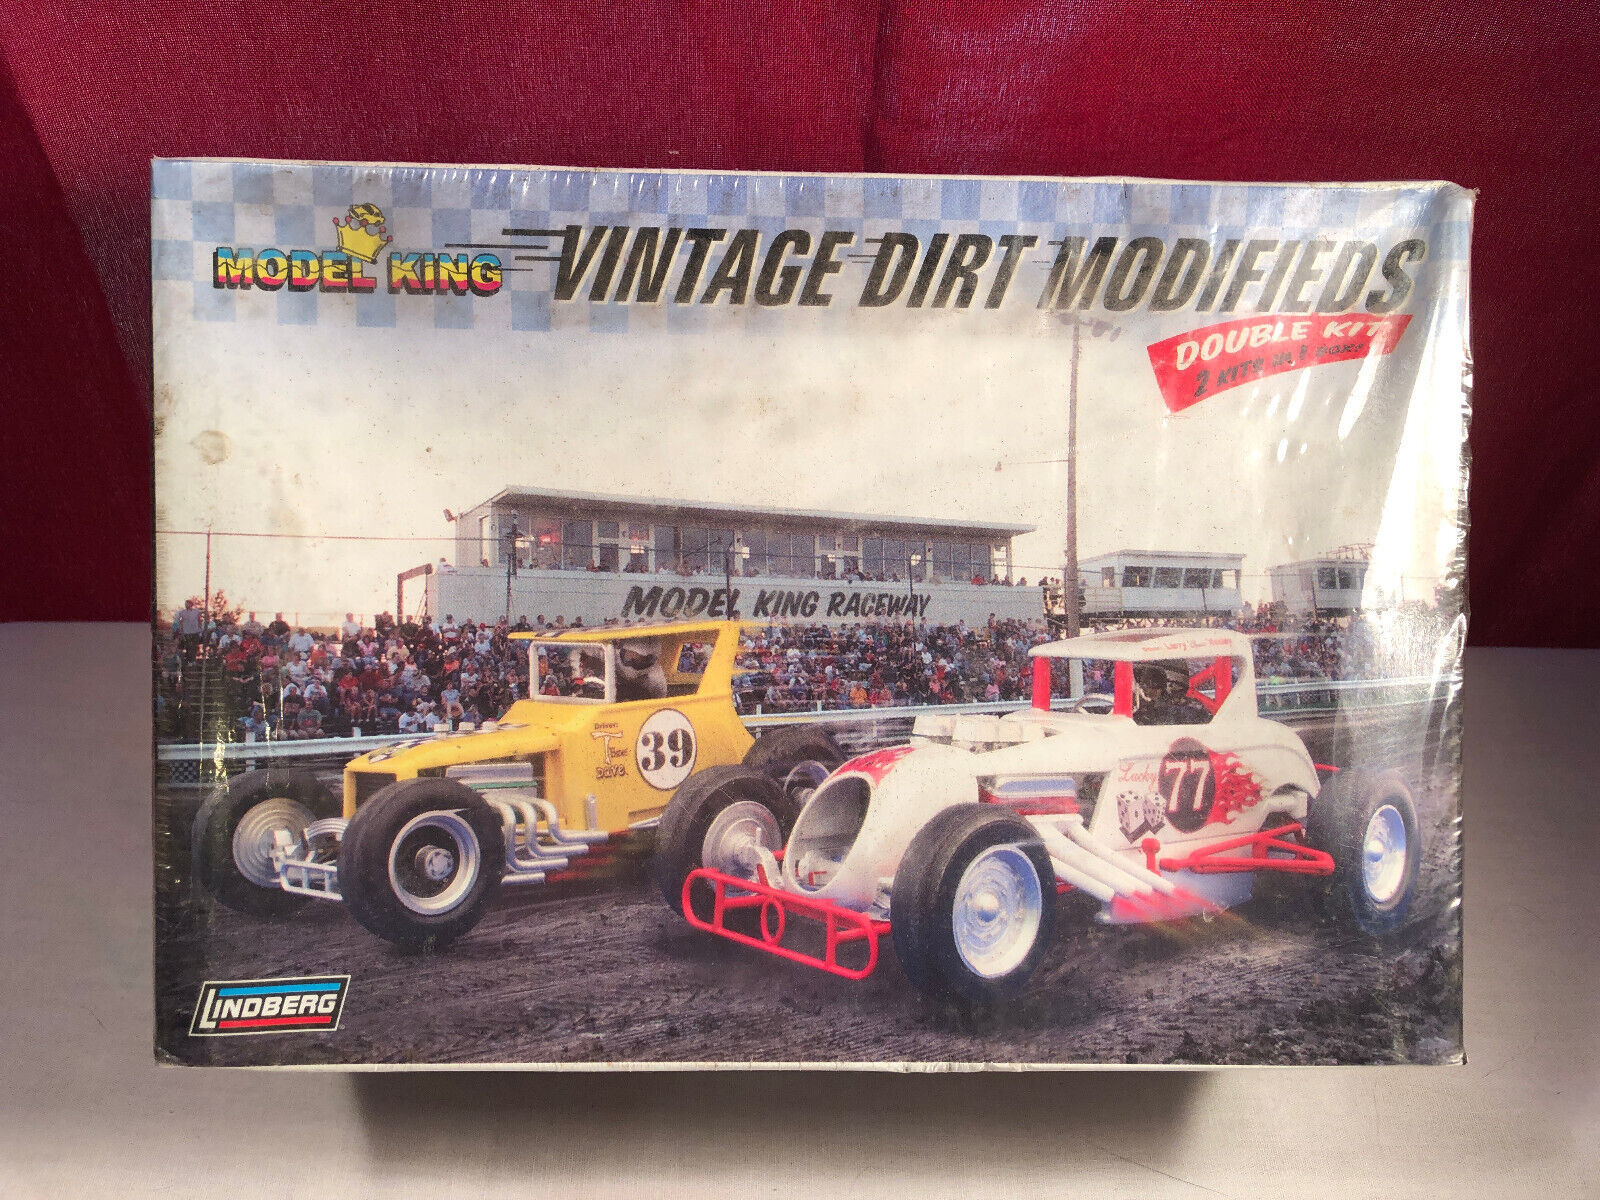 Vintage Dirt Modifieds Double Model Kit Lindberg - $34.99